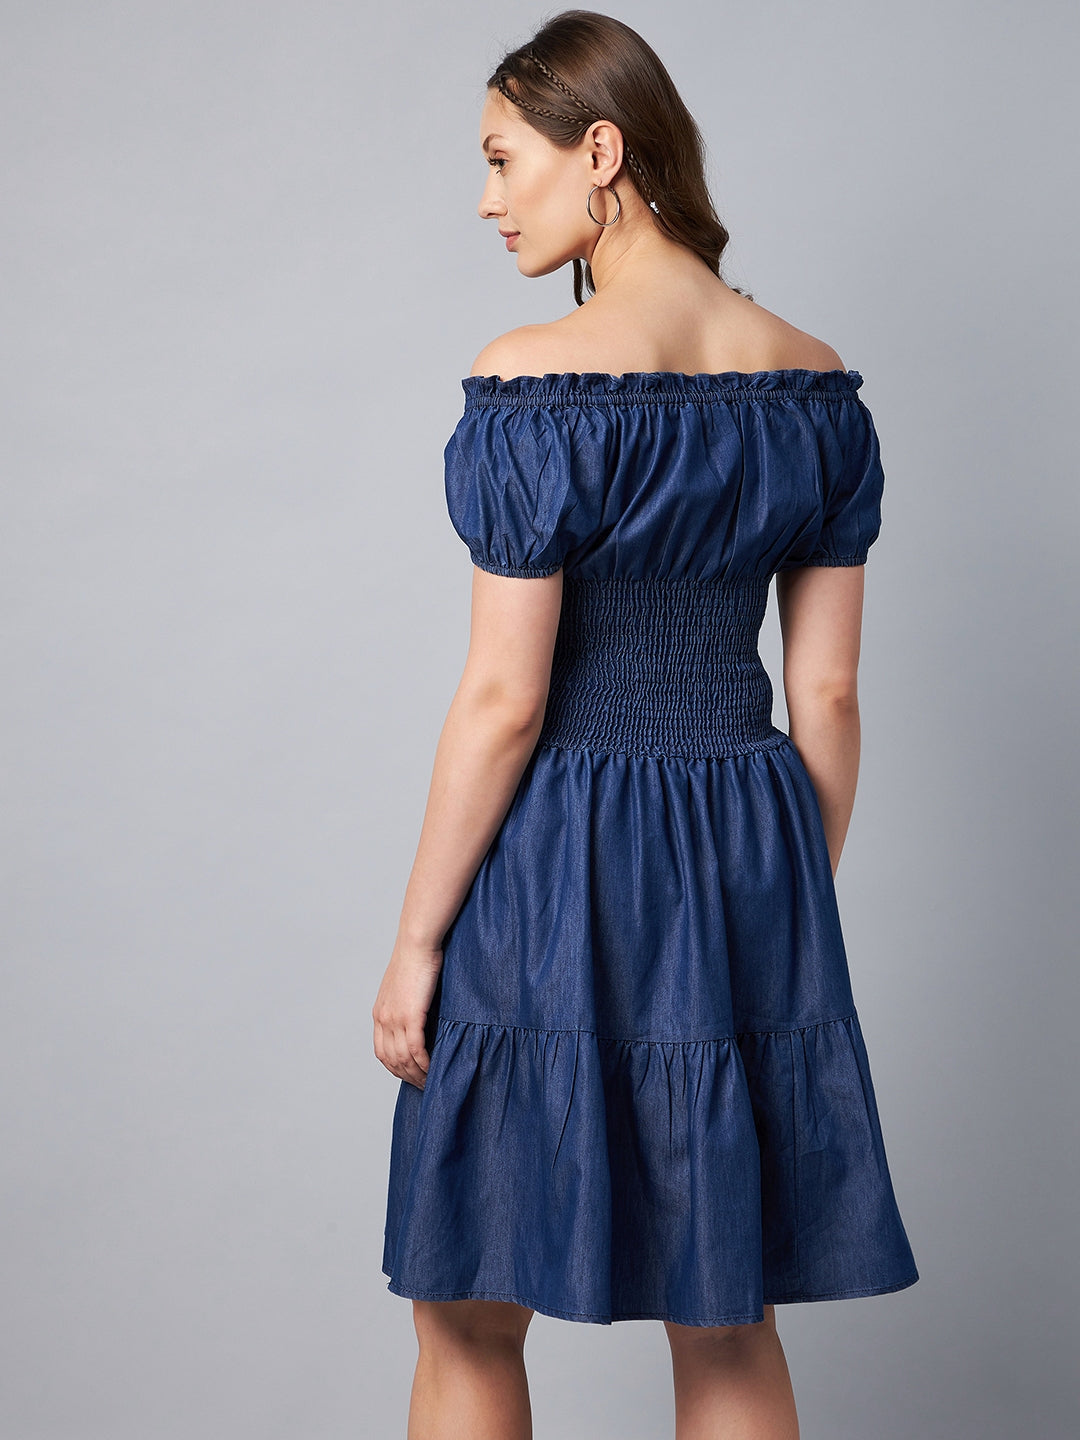 Women's Peasant Style Smocked Waist Denim Dress